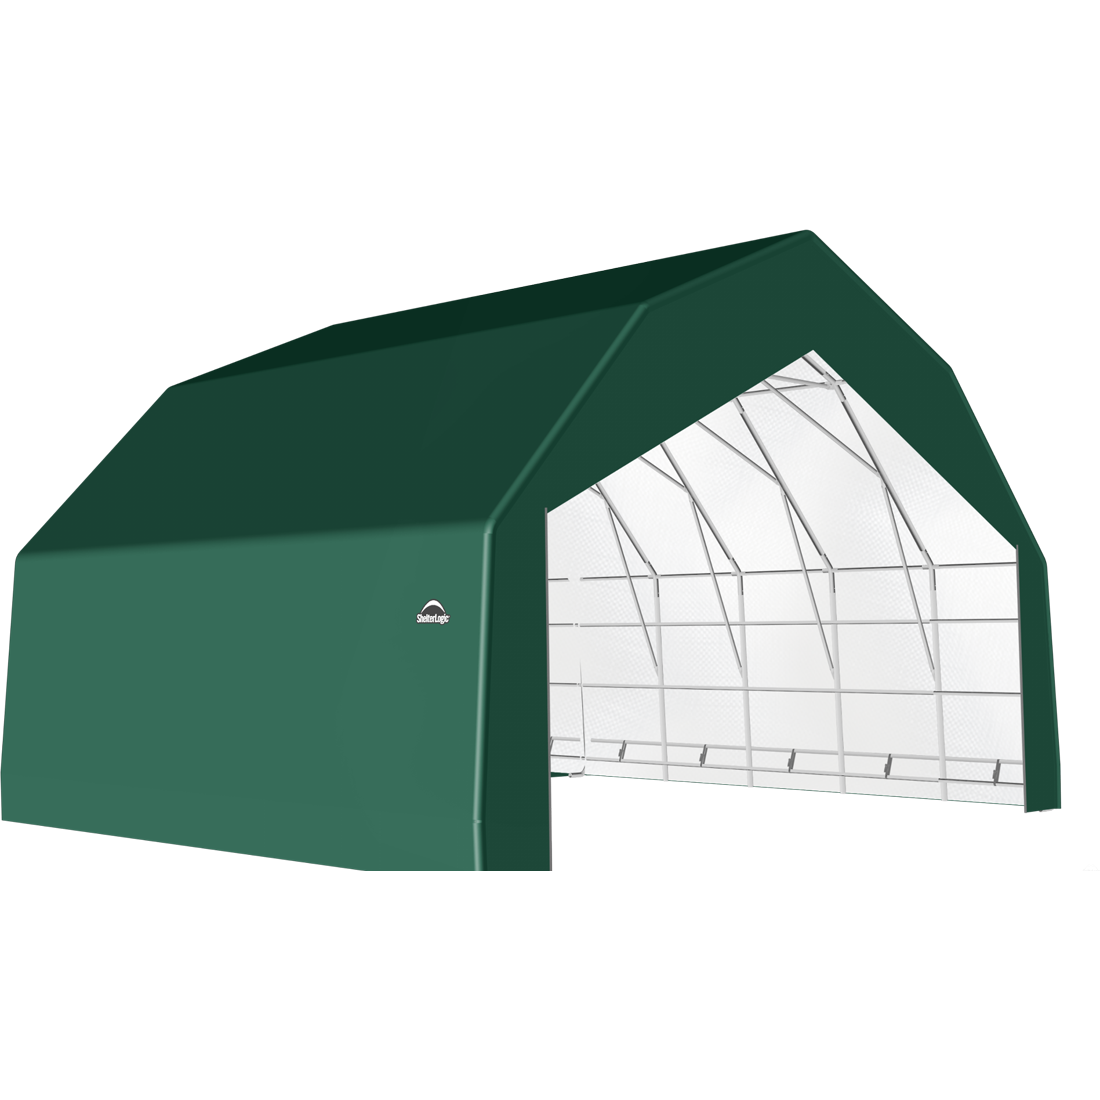 ShelterTech SP Series Barn Shelter, 30 ft. x 28 ft. x 18 ft. Heavy Duty PVC 14.5 oz. Green